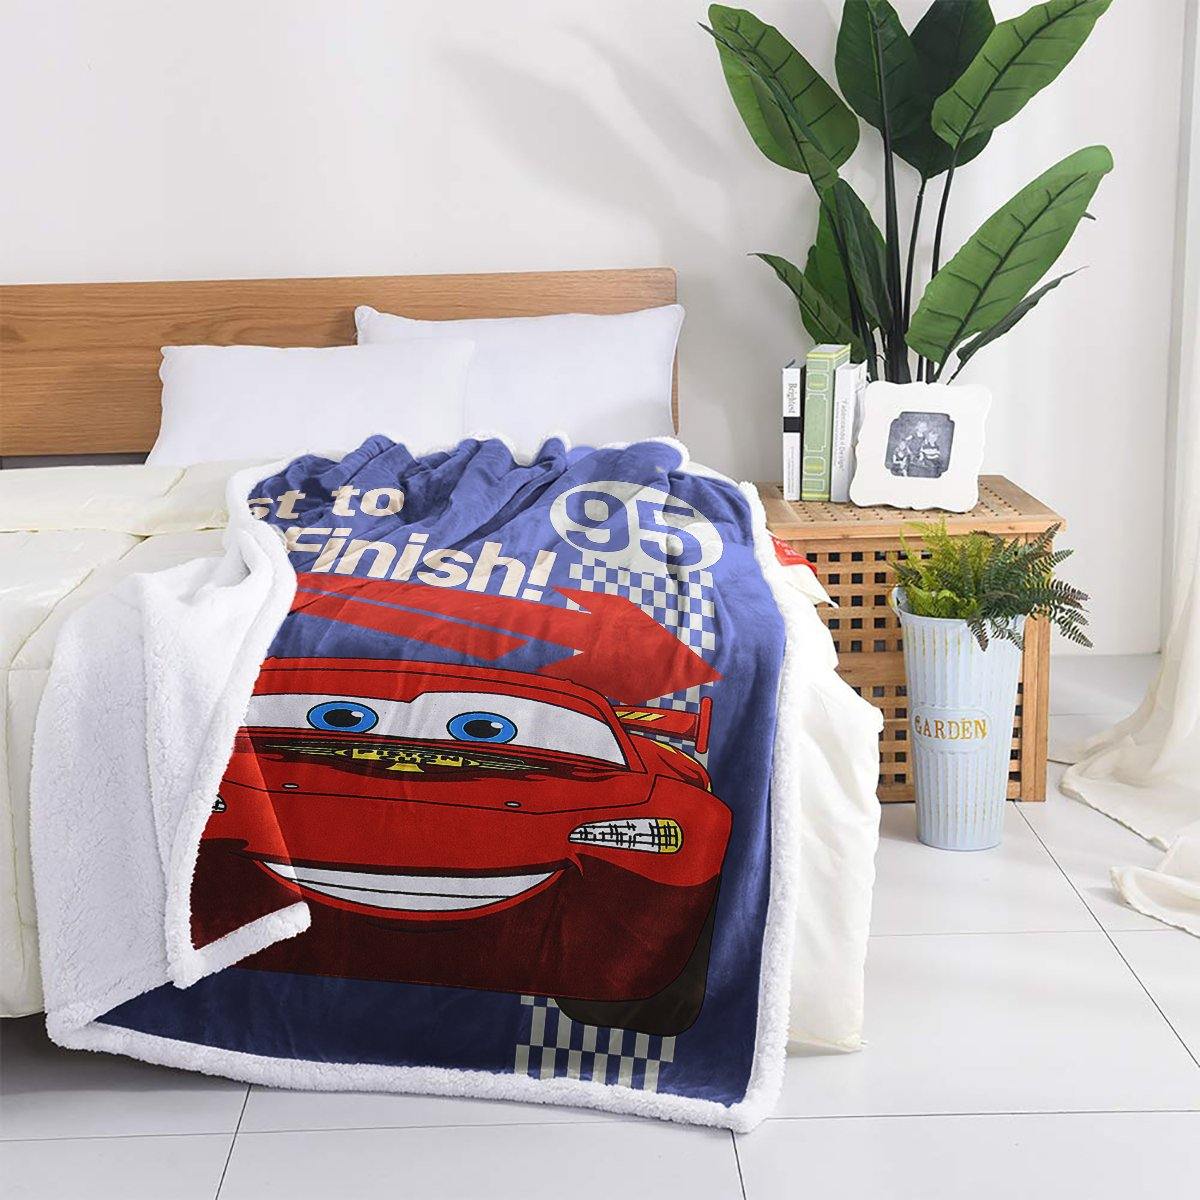 WONGS BEDDING Children's toy car fleece blanket bedroom living room decoration blanket - Wongs bedding